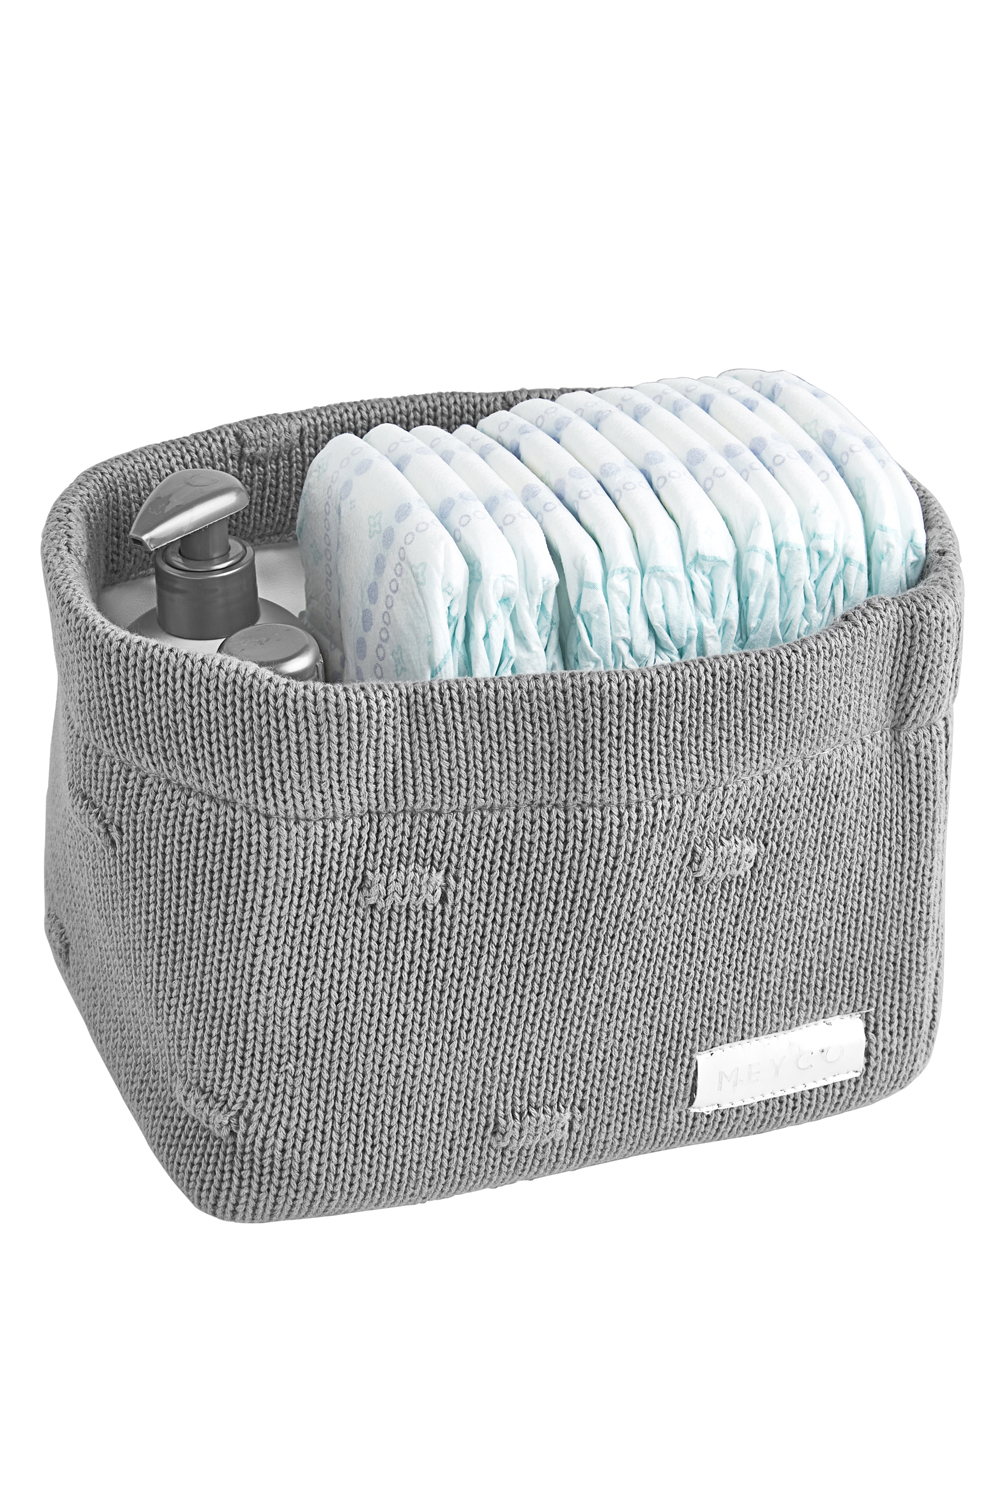 Nursery basket Knots - grey - Small